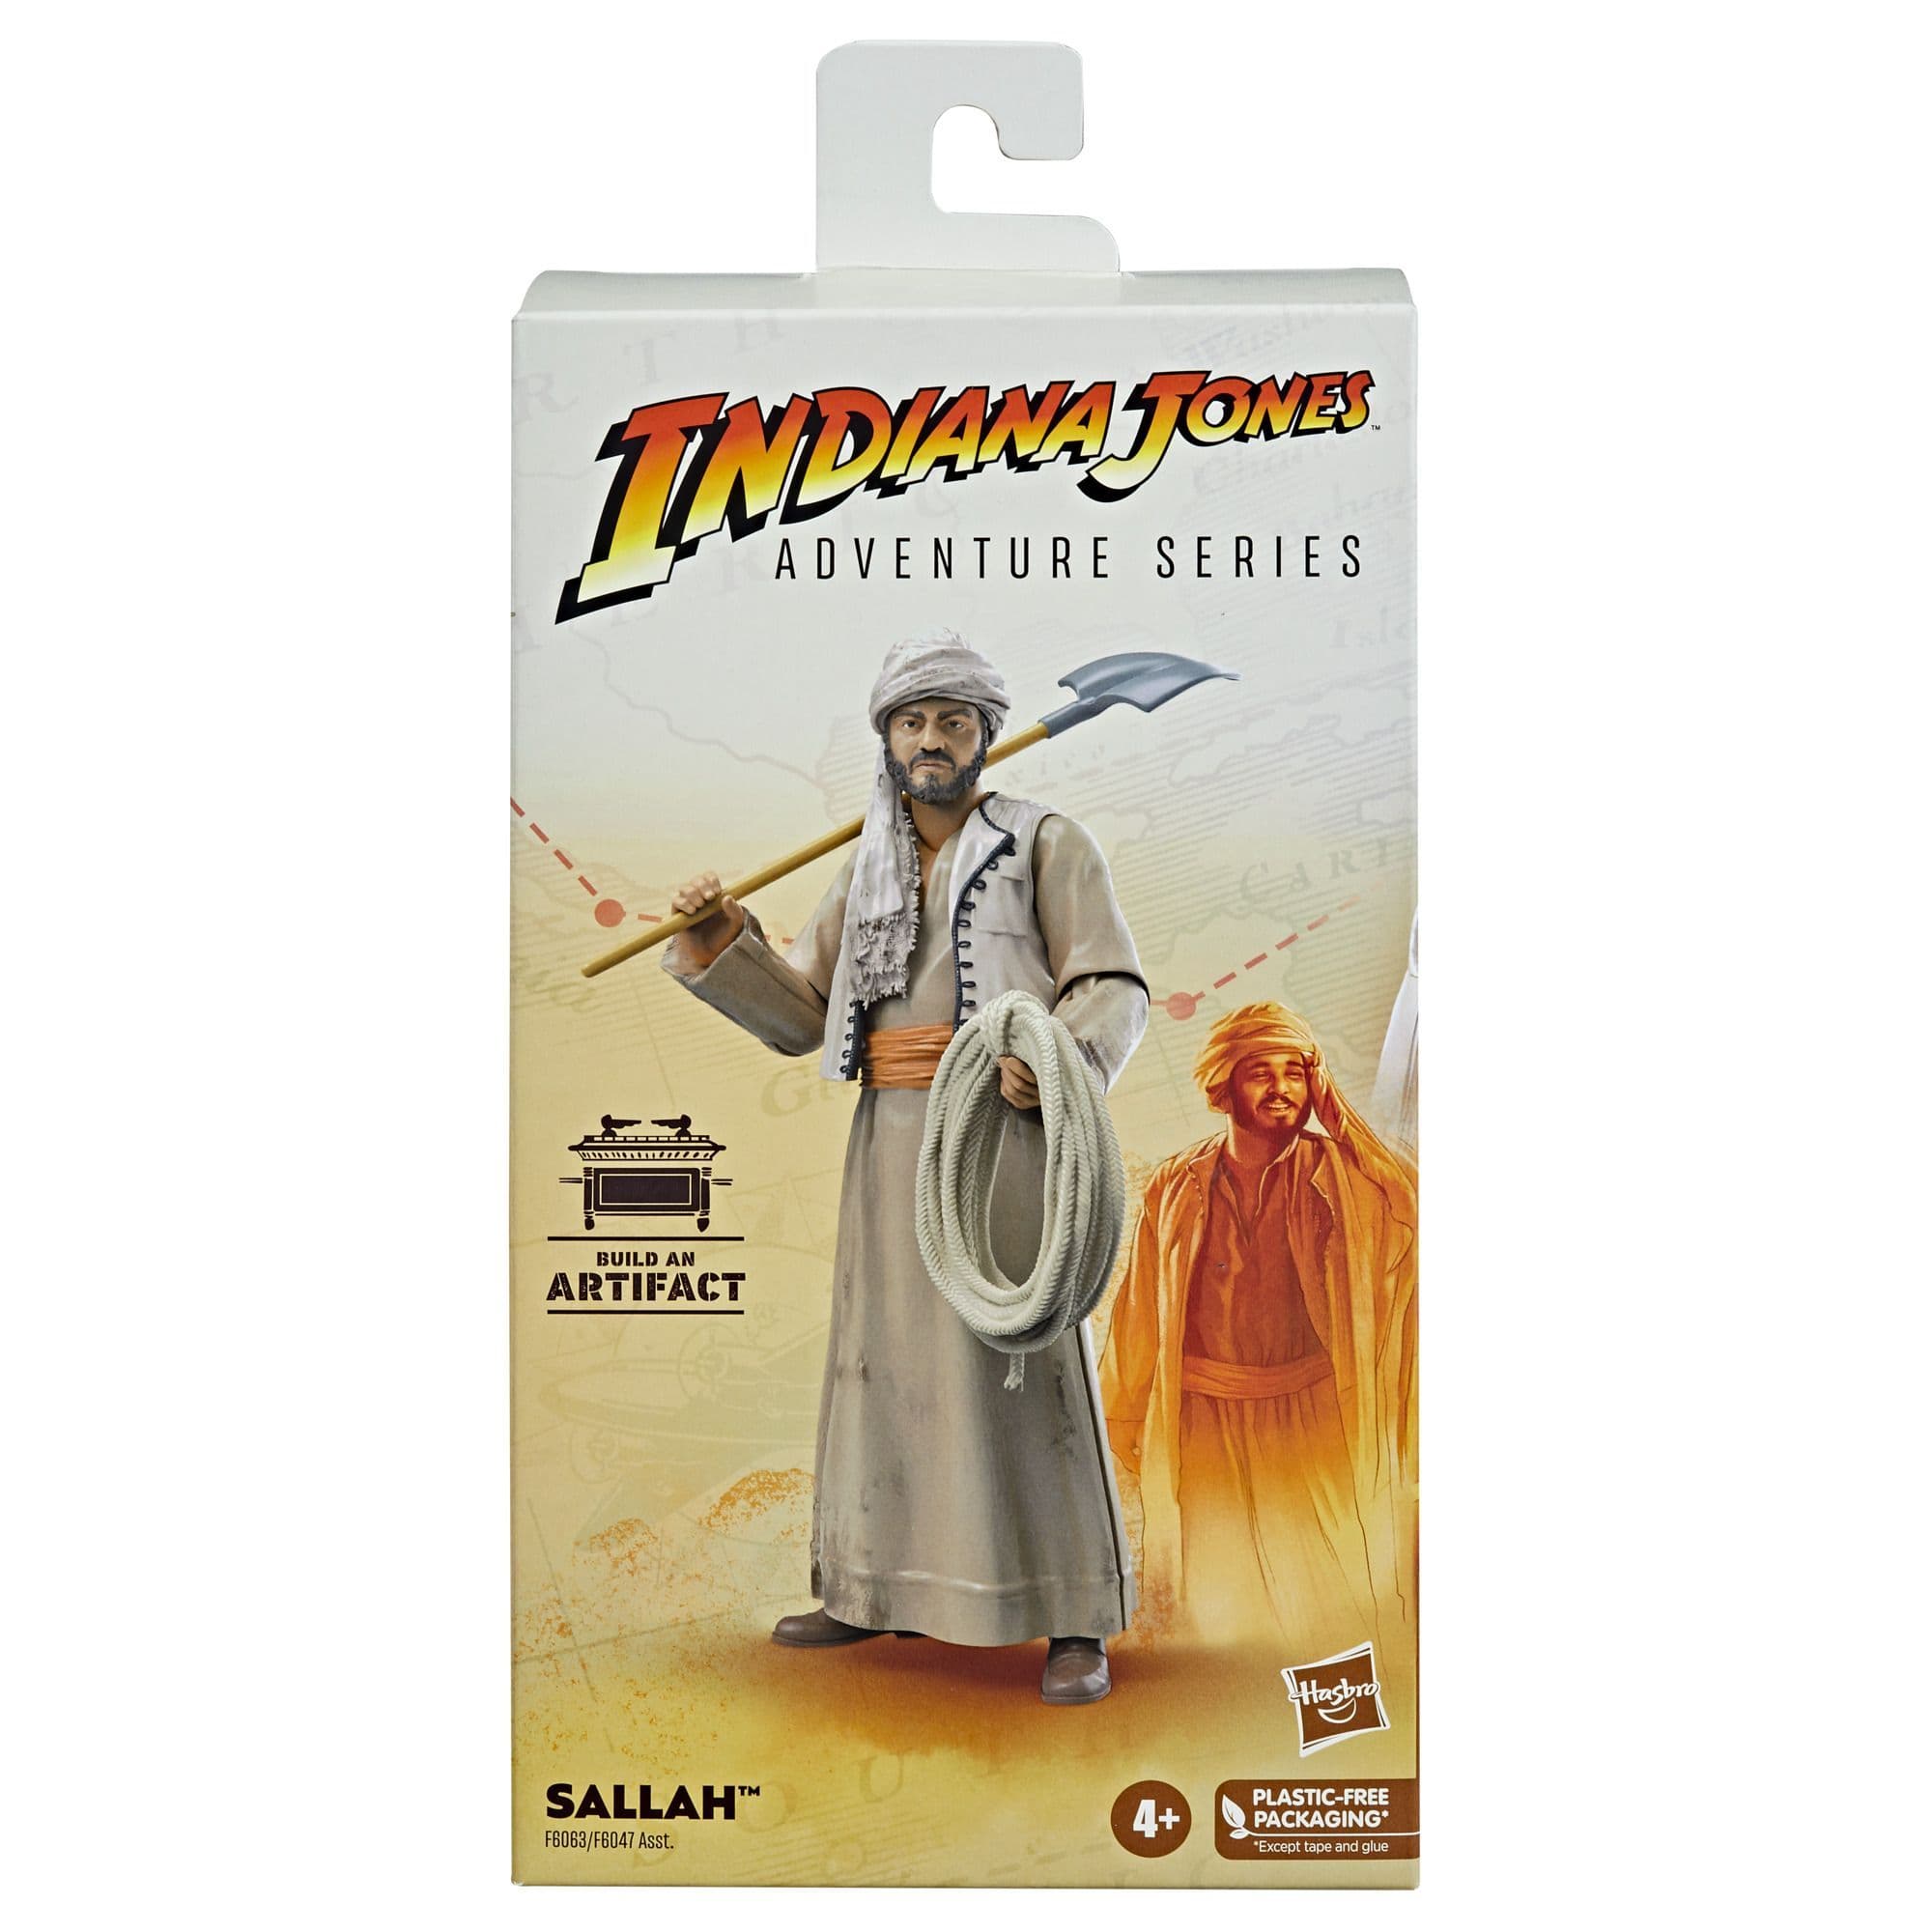 Indiana Jones Adventure Series Raiders of the Lost Ark Sallah 6" Figure